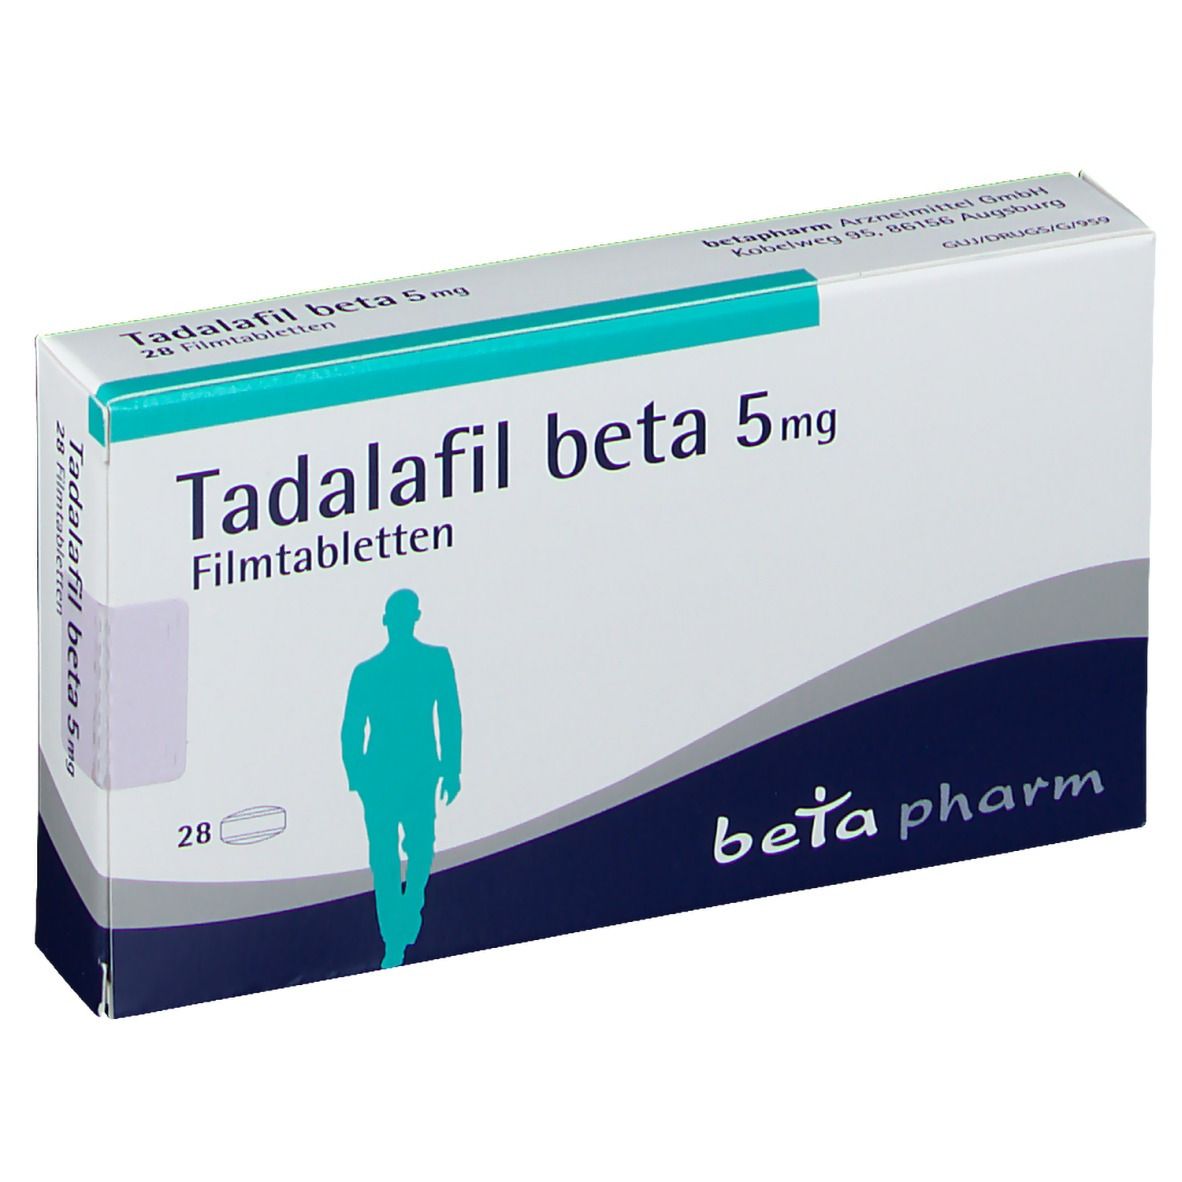 Tadalafil beta